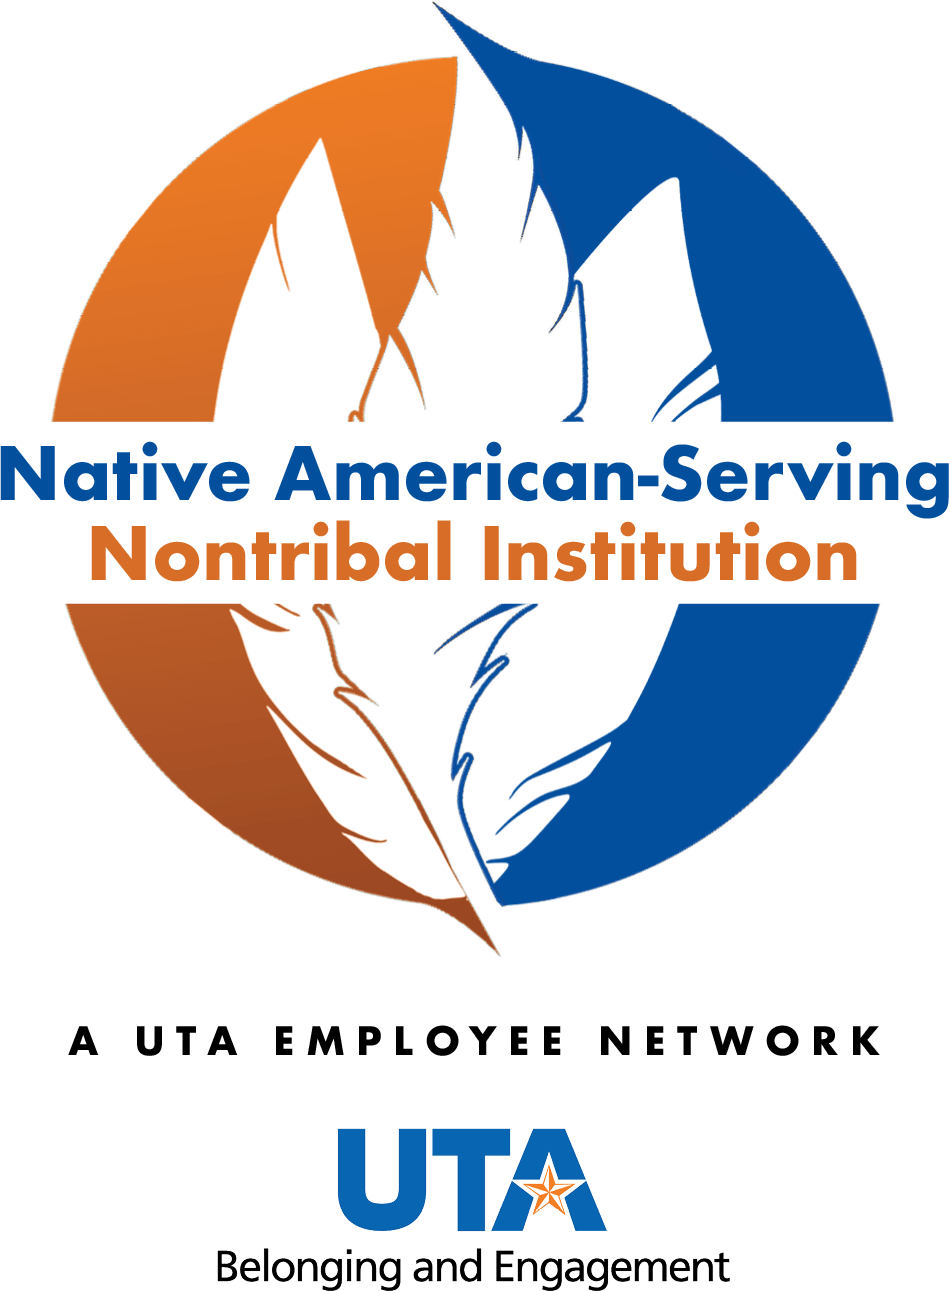 Native American Serving Nontribal Institution Logo - New